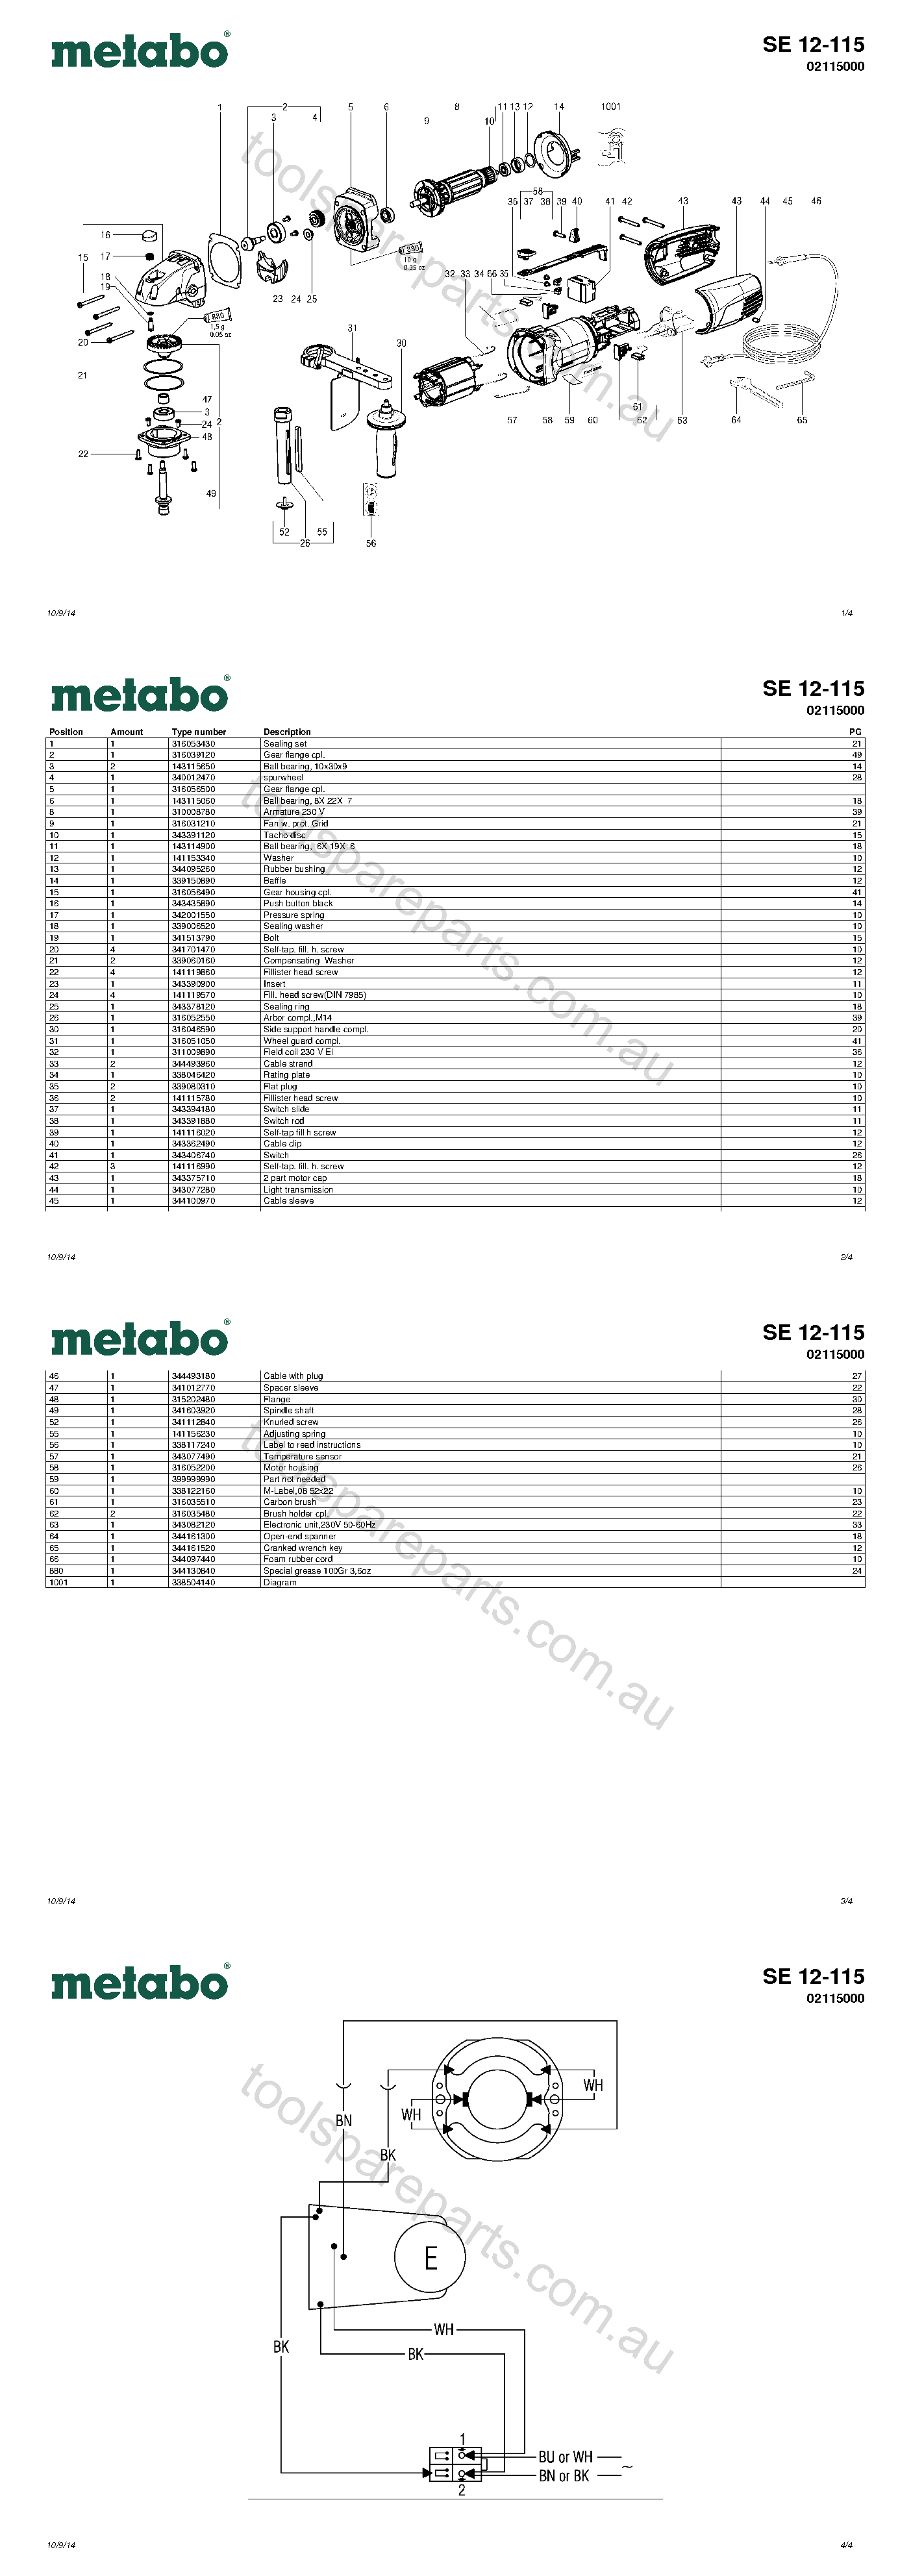 Metabo SE 12-115 02115000  Diagram 1